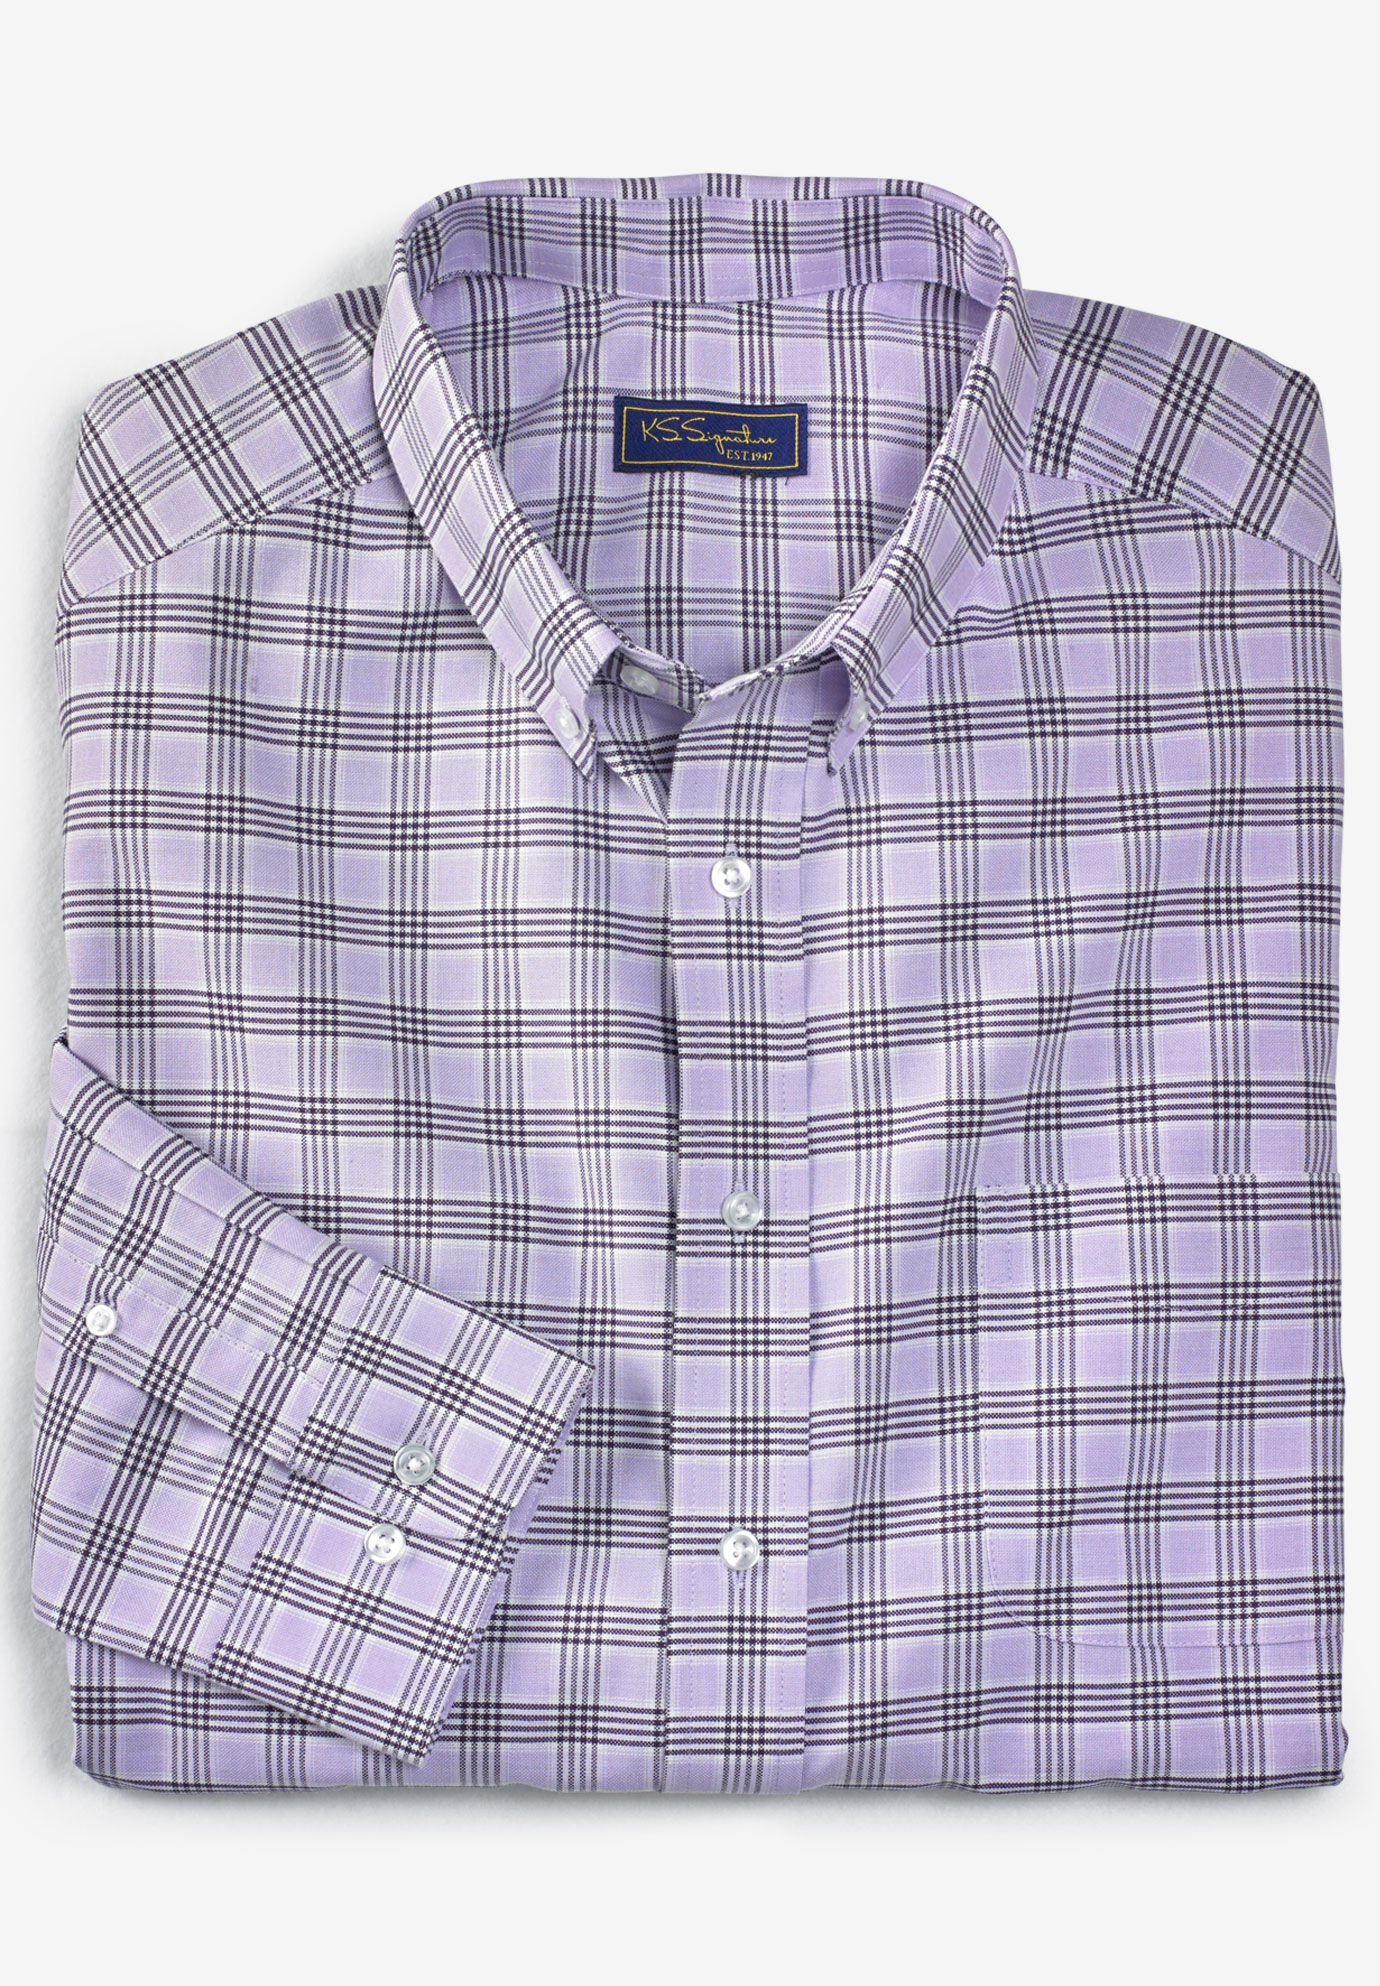 KLJR Men Big and Tall Classic Cotton Plaid Print Loose Fit Long Sleeve Checkered Shirt